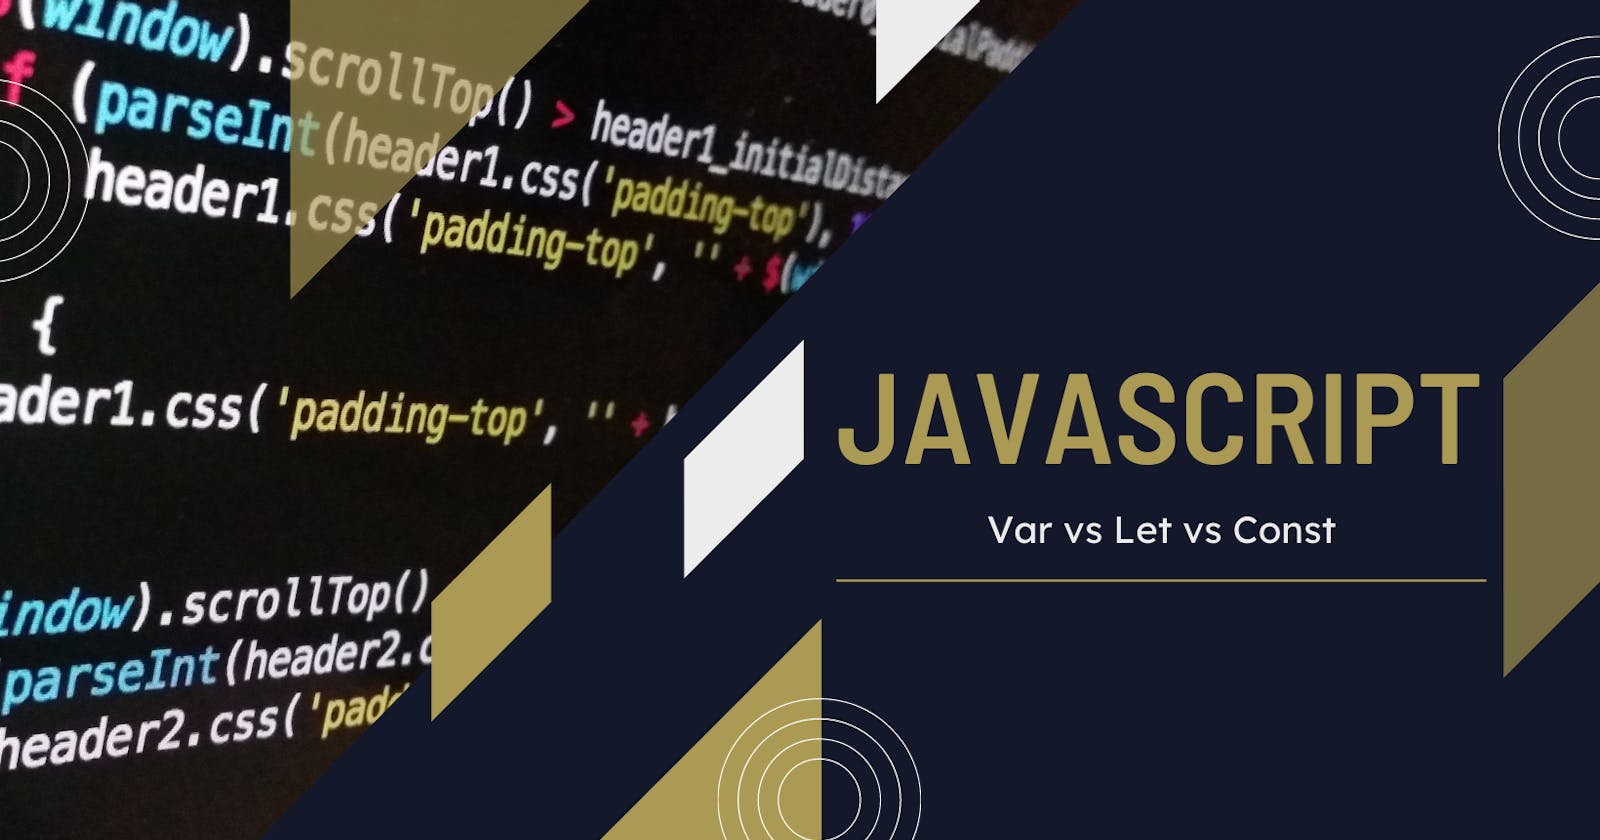 Var vs Let vs Const in JavaScript - What should you be using?